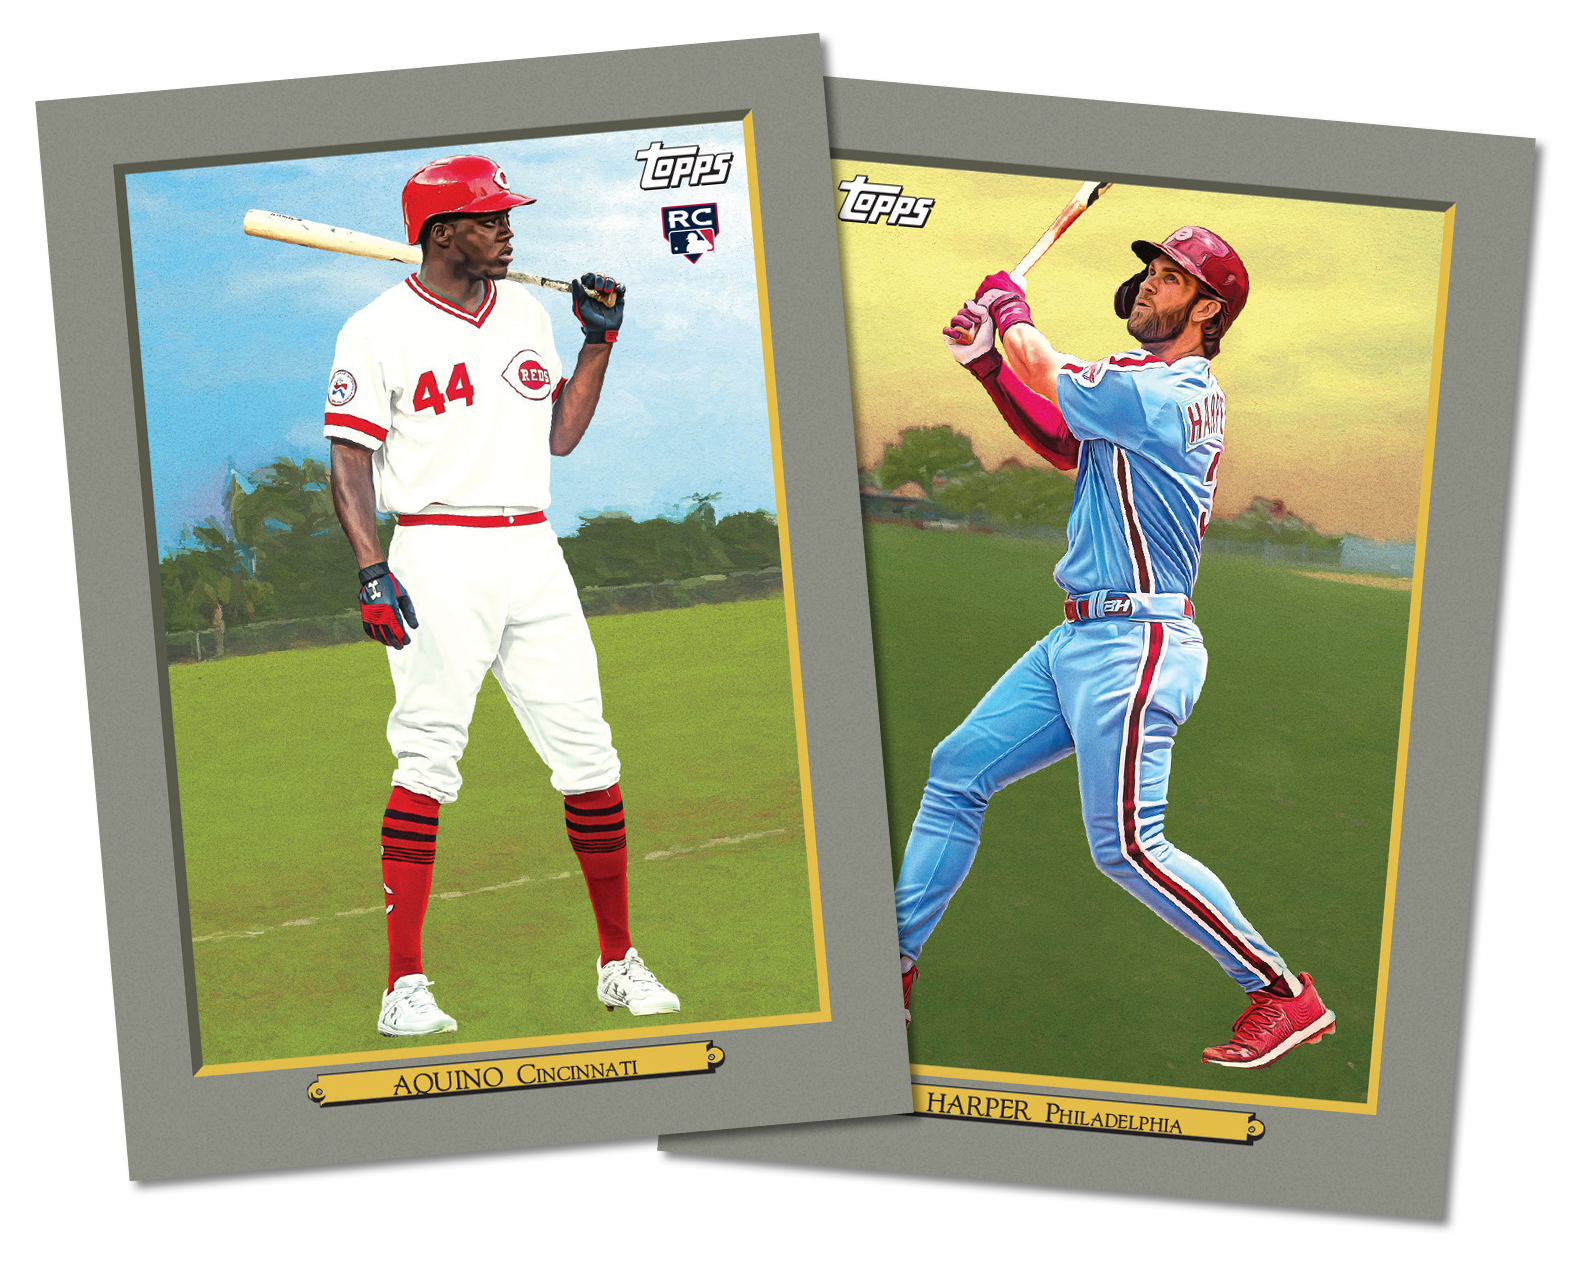 Buzz's Pick Six: 2020 Topps Series 1 baseball cards / Blowout Buzz